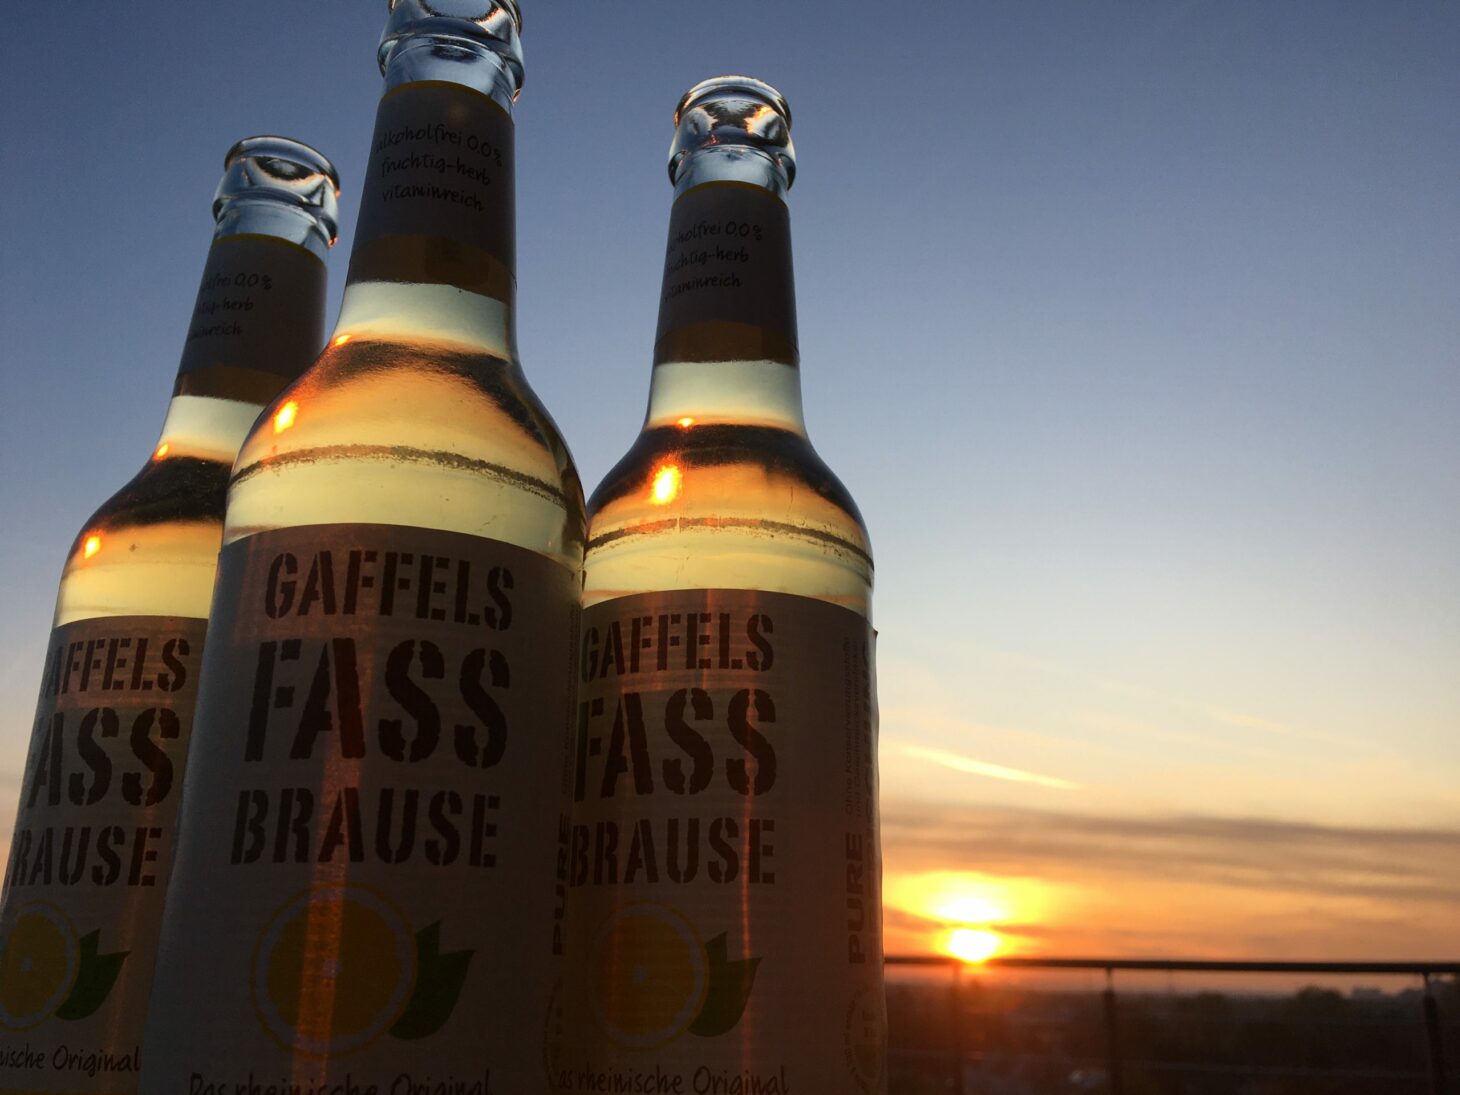 Image of three bottles of Fassbrause before sunset, valantic branch Siegburg